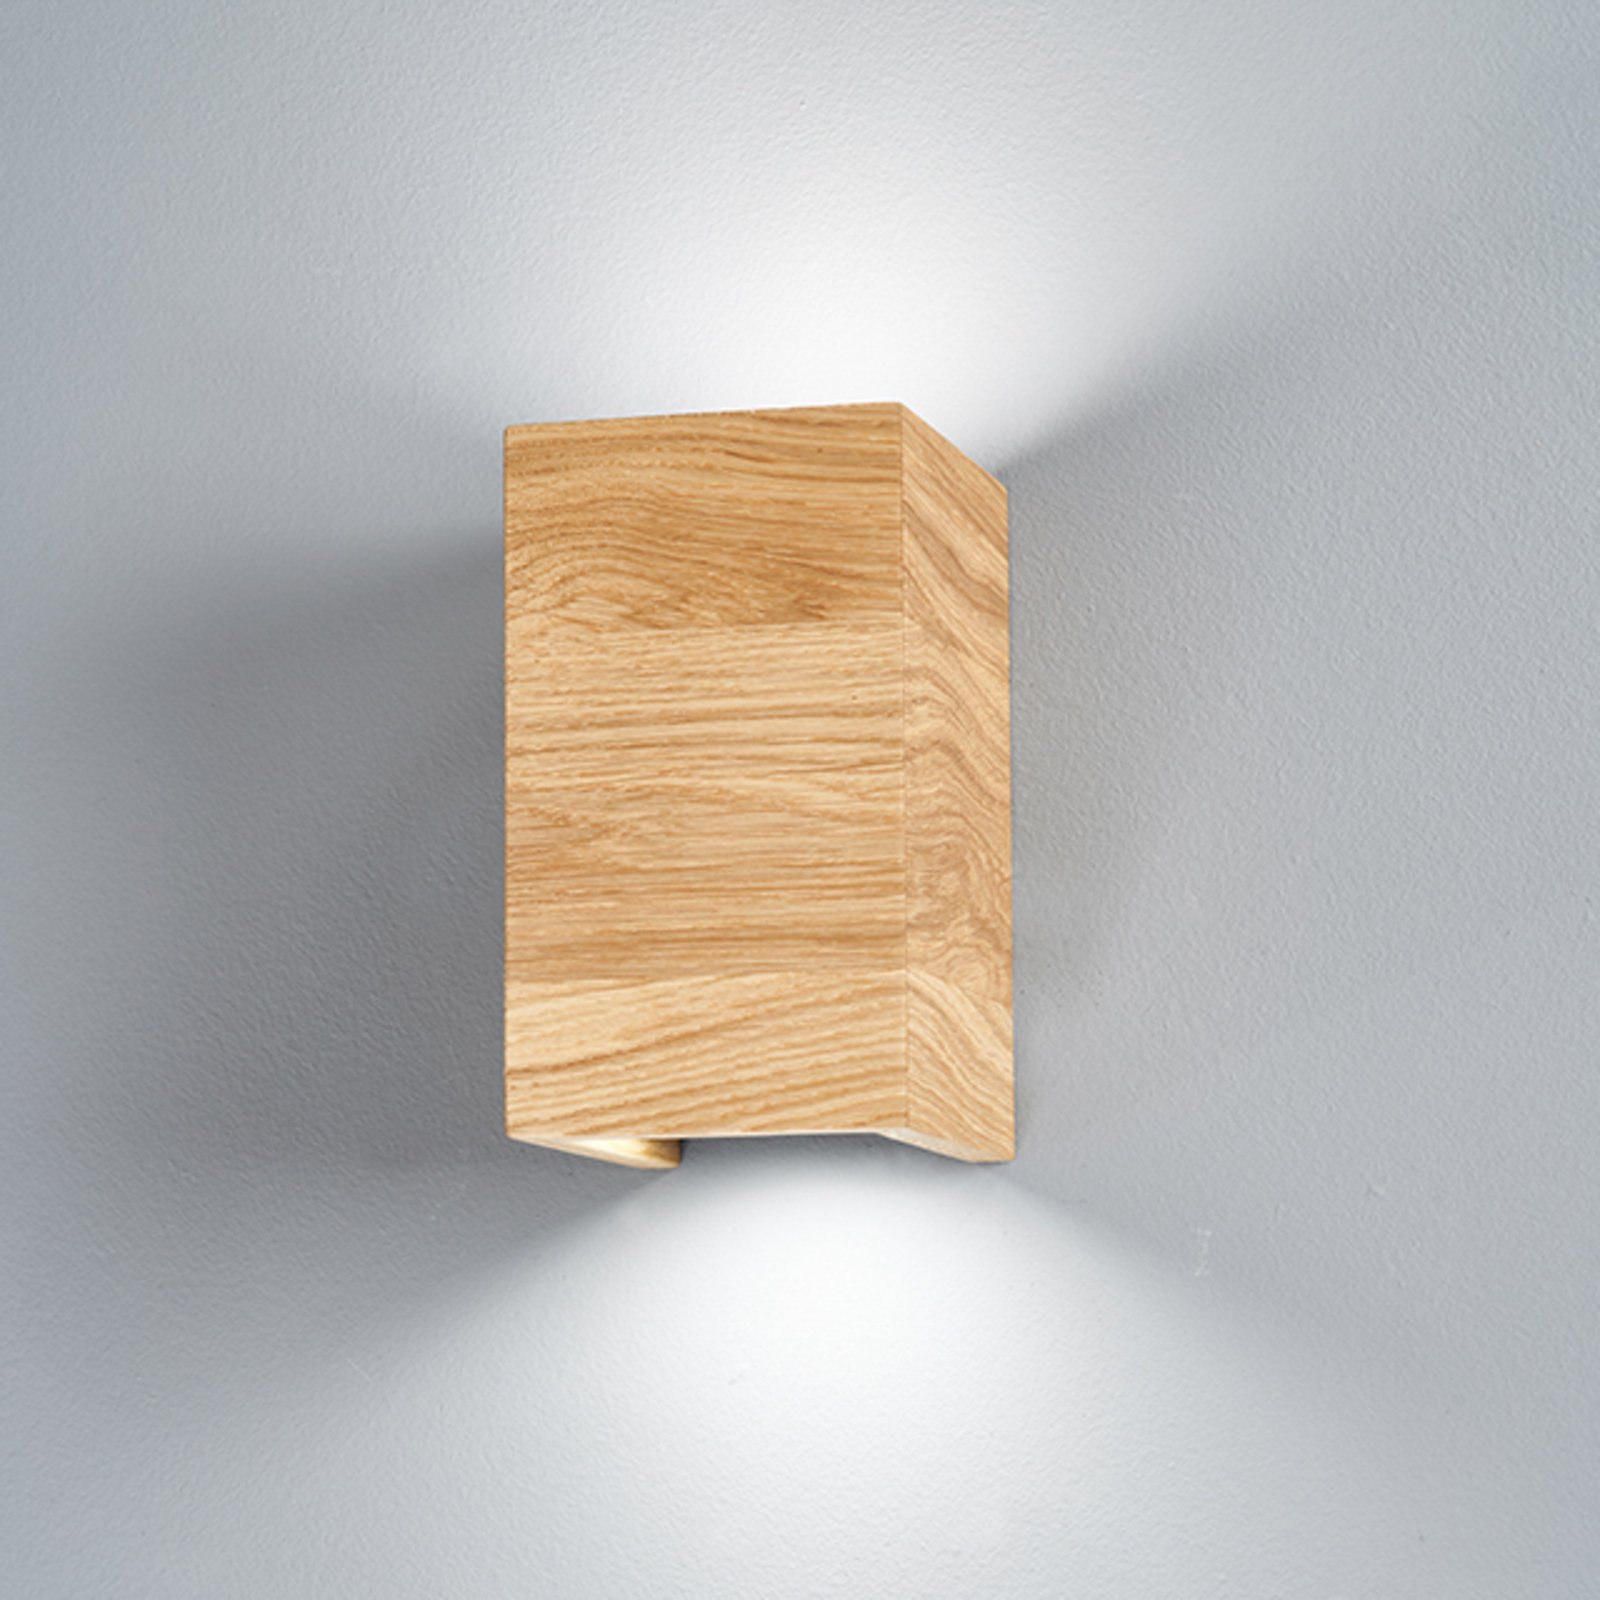 Shine Wood LED wall light oak 2 x GU10 10 x 18 cm